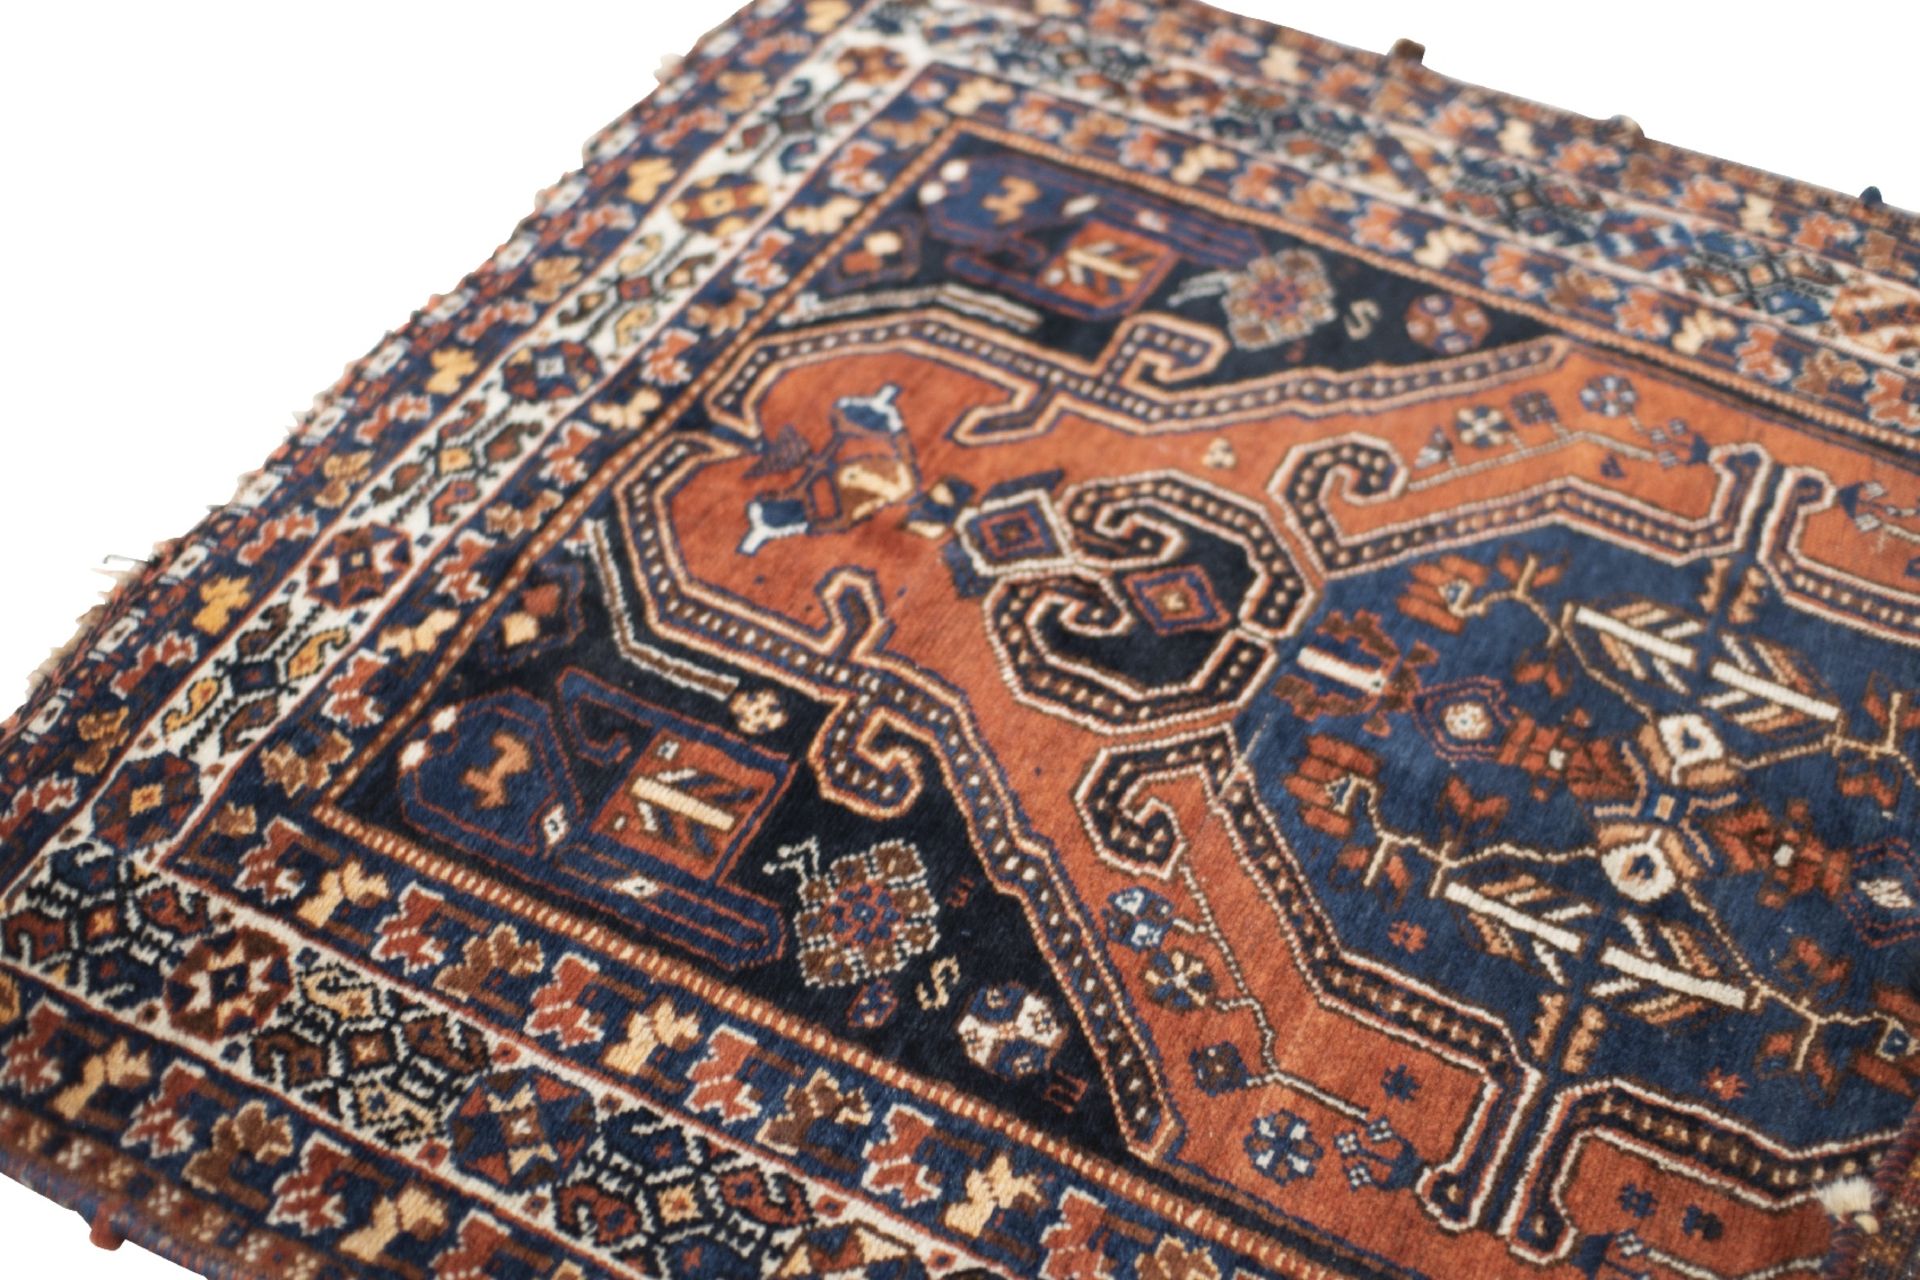 Shiraz Teppich | Shiraz carpet - Image 3 of 4